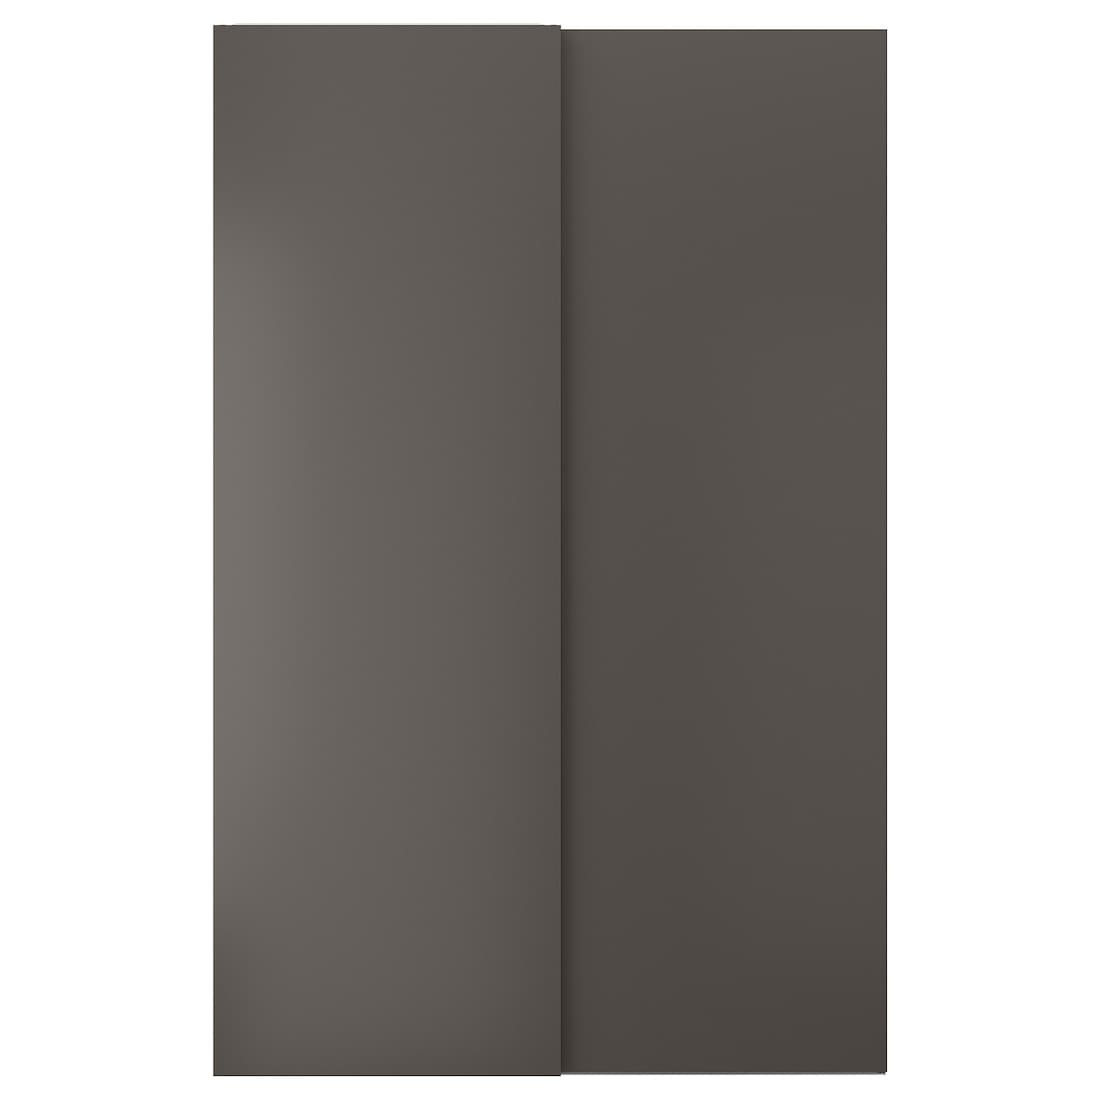 HASVIK ХАСВИК Пара раздвижных дверей, темно-серый, 150x236 см